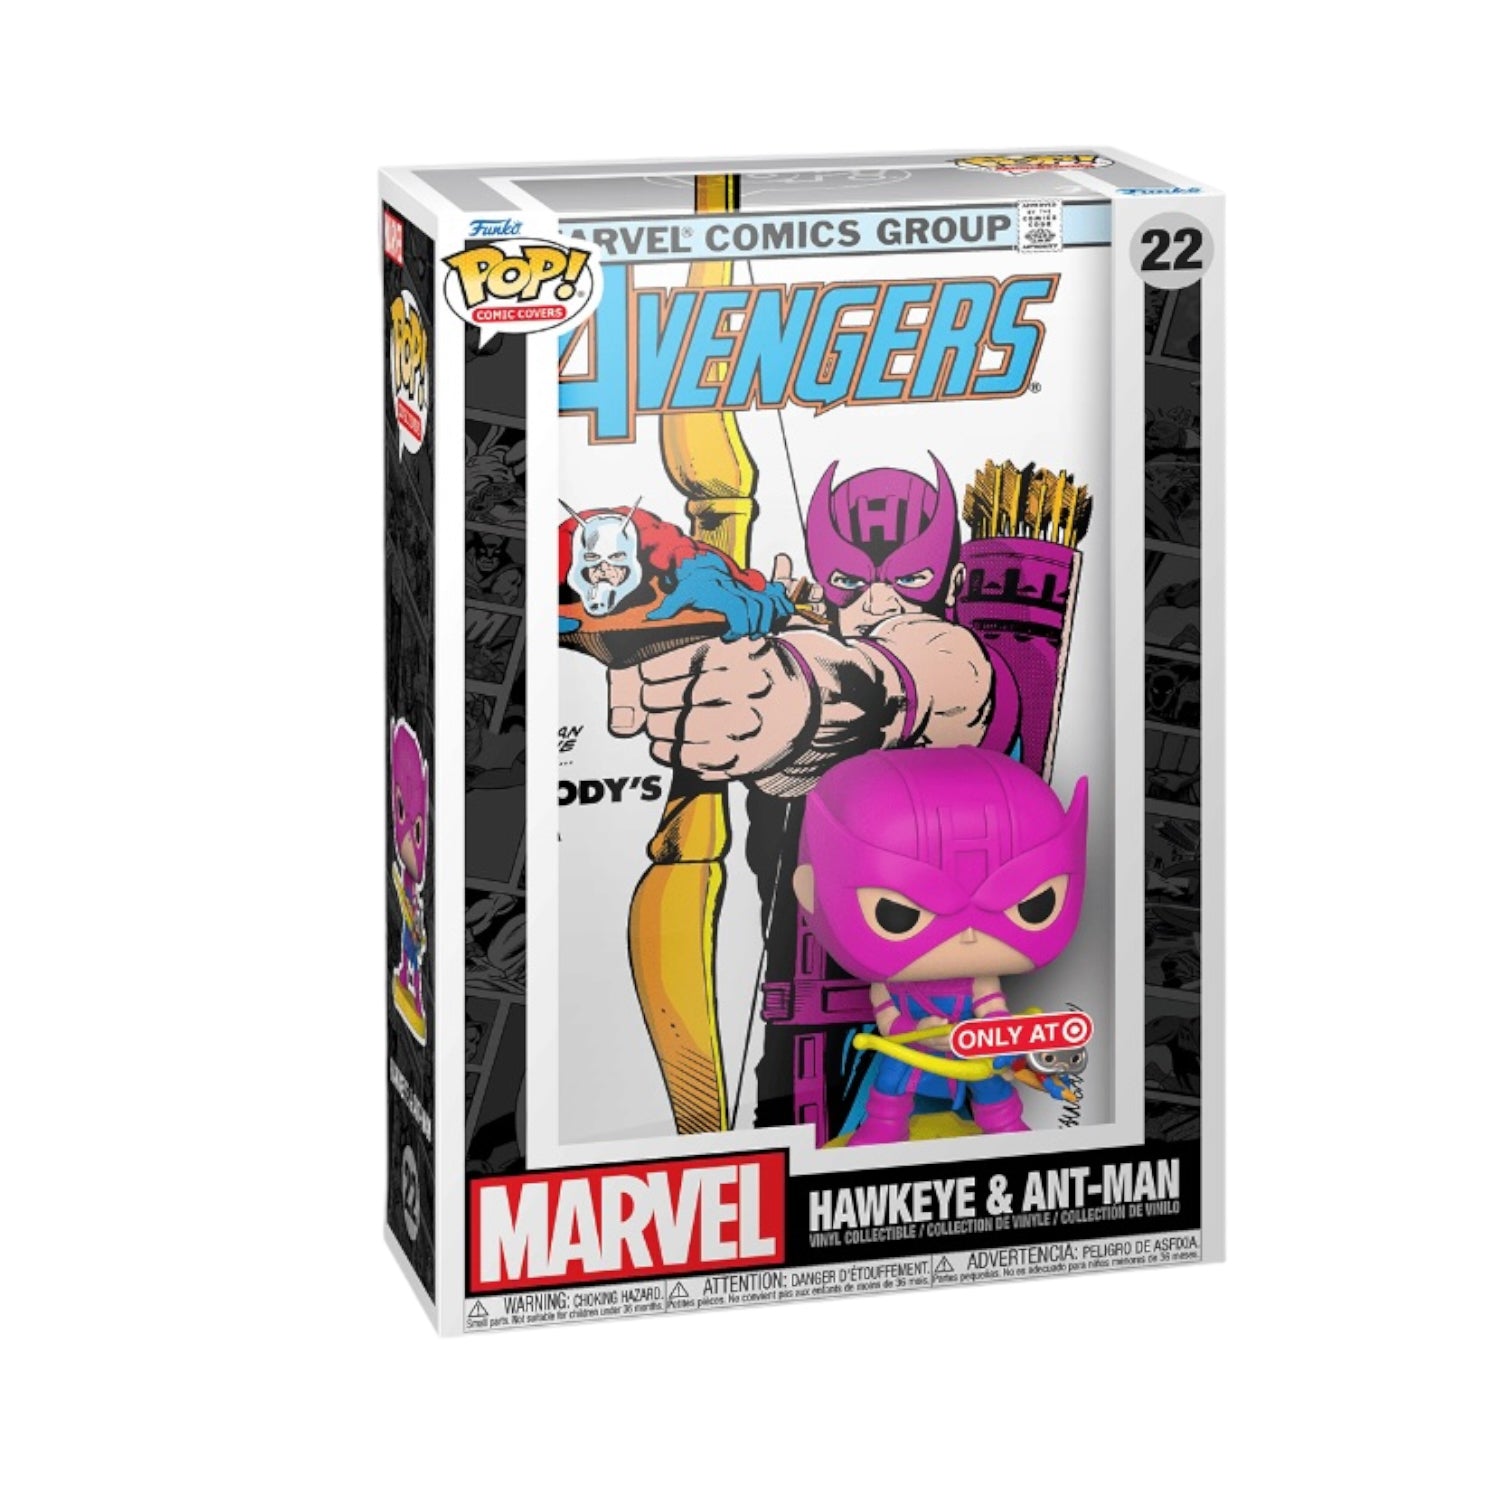 Hawkeye & Ant-Man #22 Comic Cover Funko Pop! - Avengers - Target Exclusive